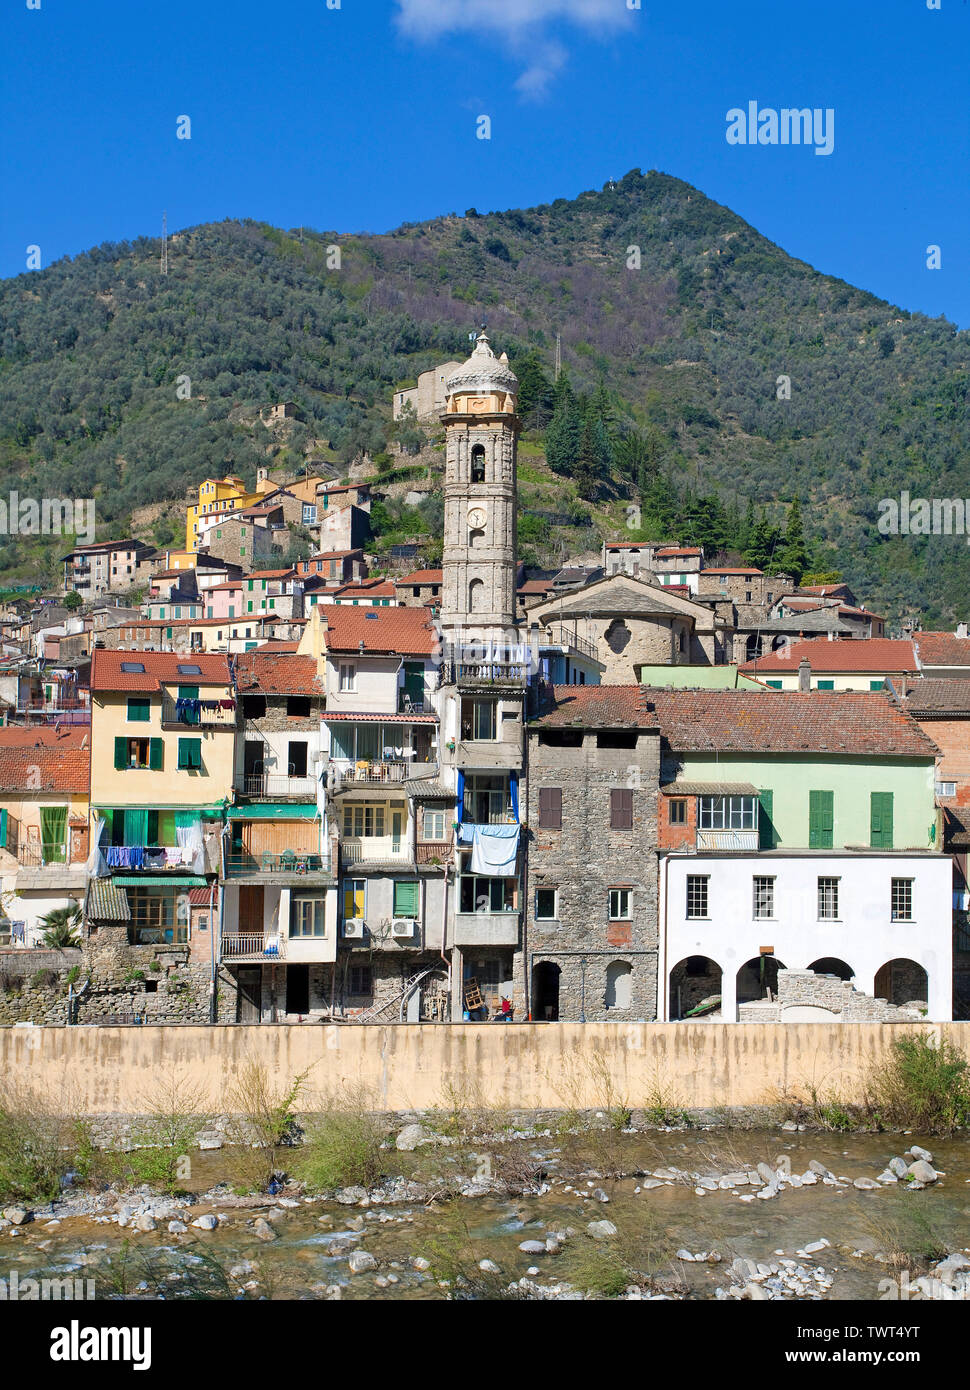 Badalucco, medieval village at province Imperia, Riviera di Ponente, Liguria, Italy Stock Photo